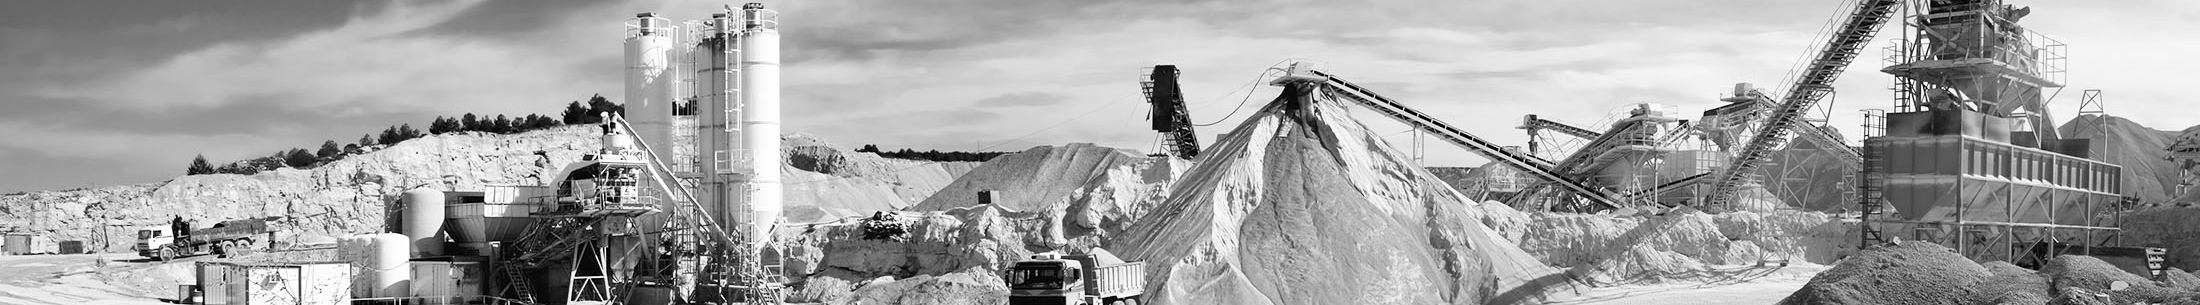 Mining & Materials - Rotolok Australia